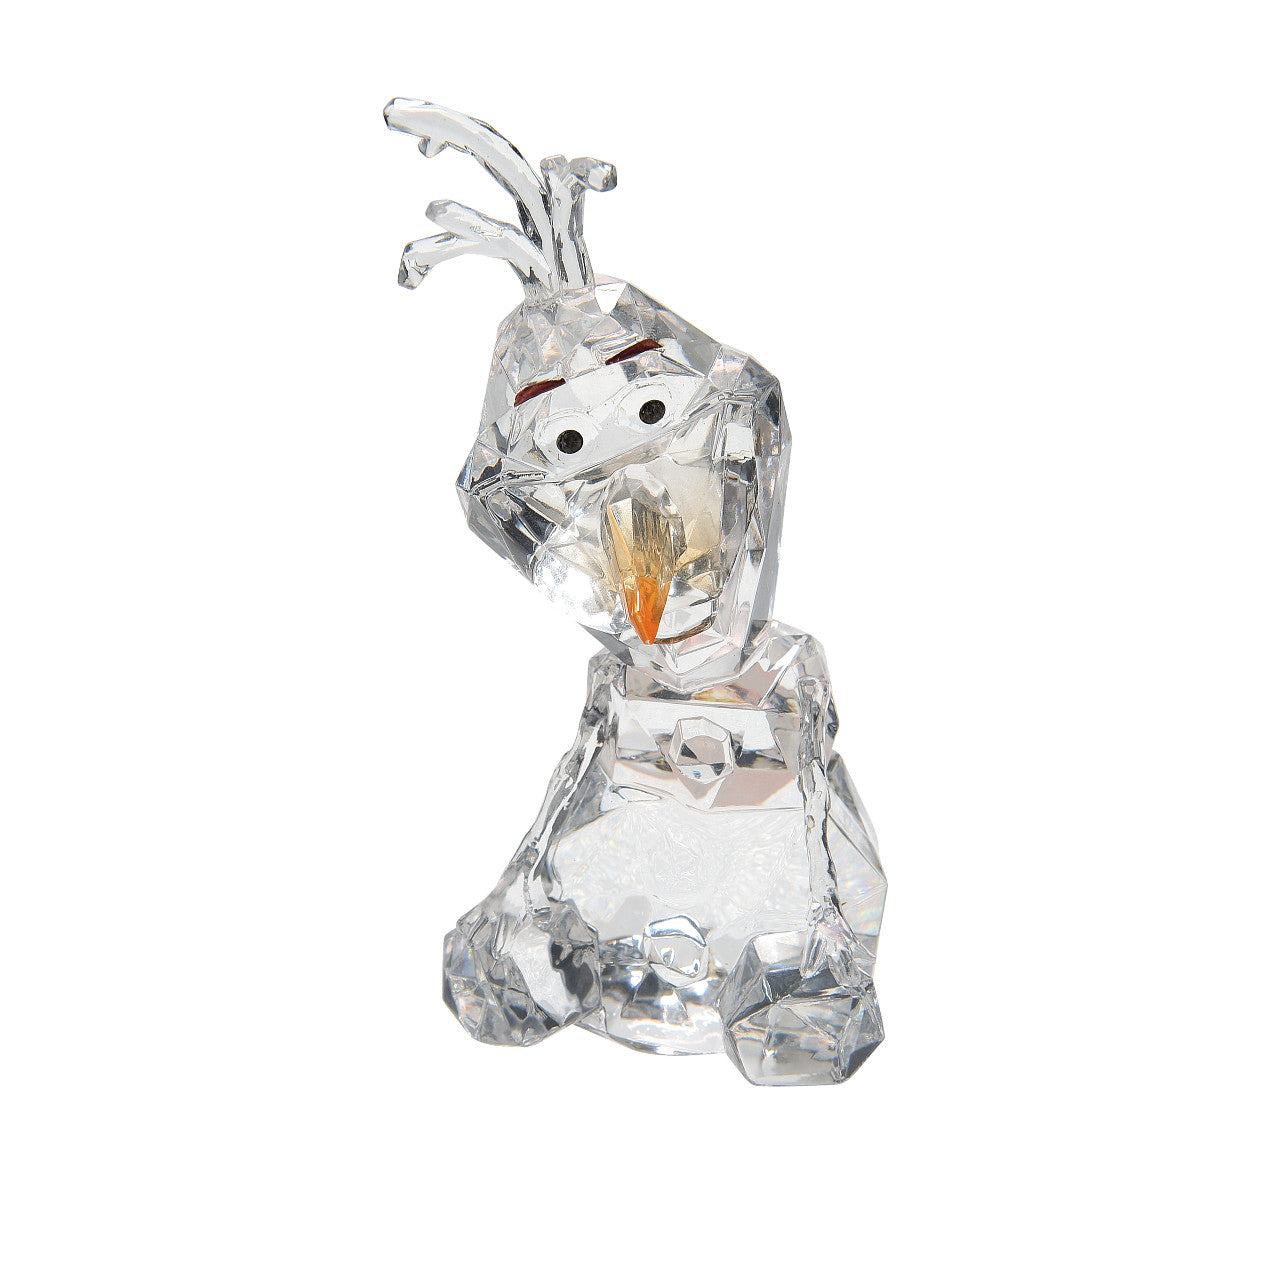 Olaf Facets Figurine